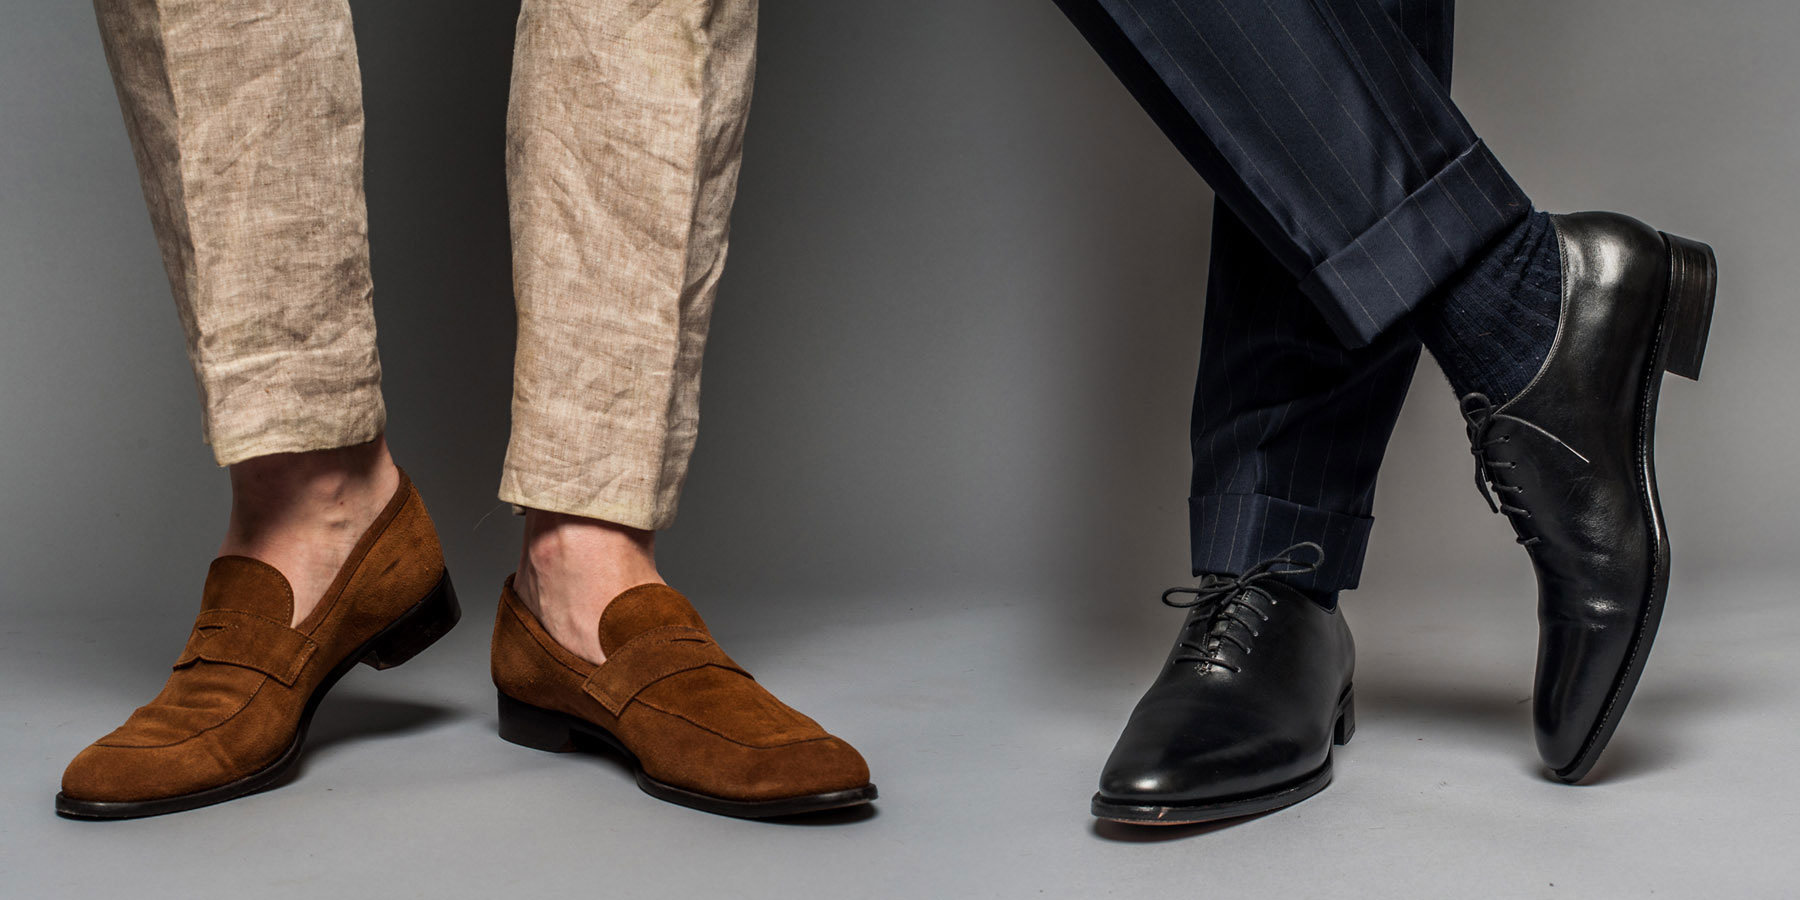 men's narrow formal shoes